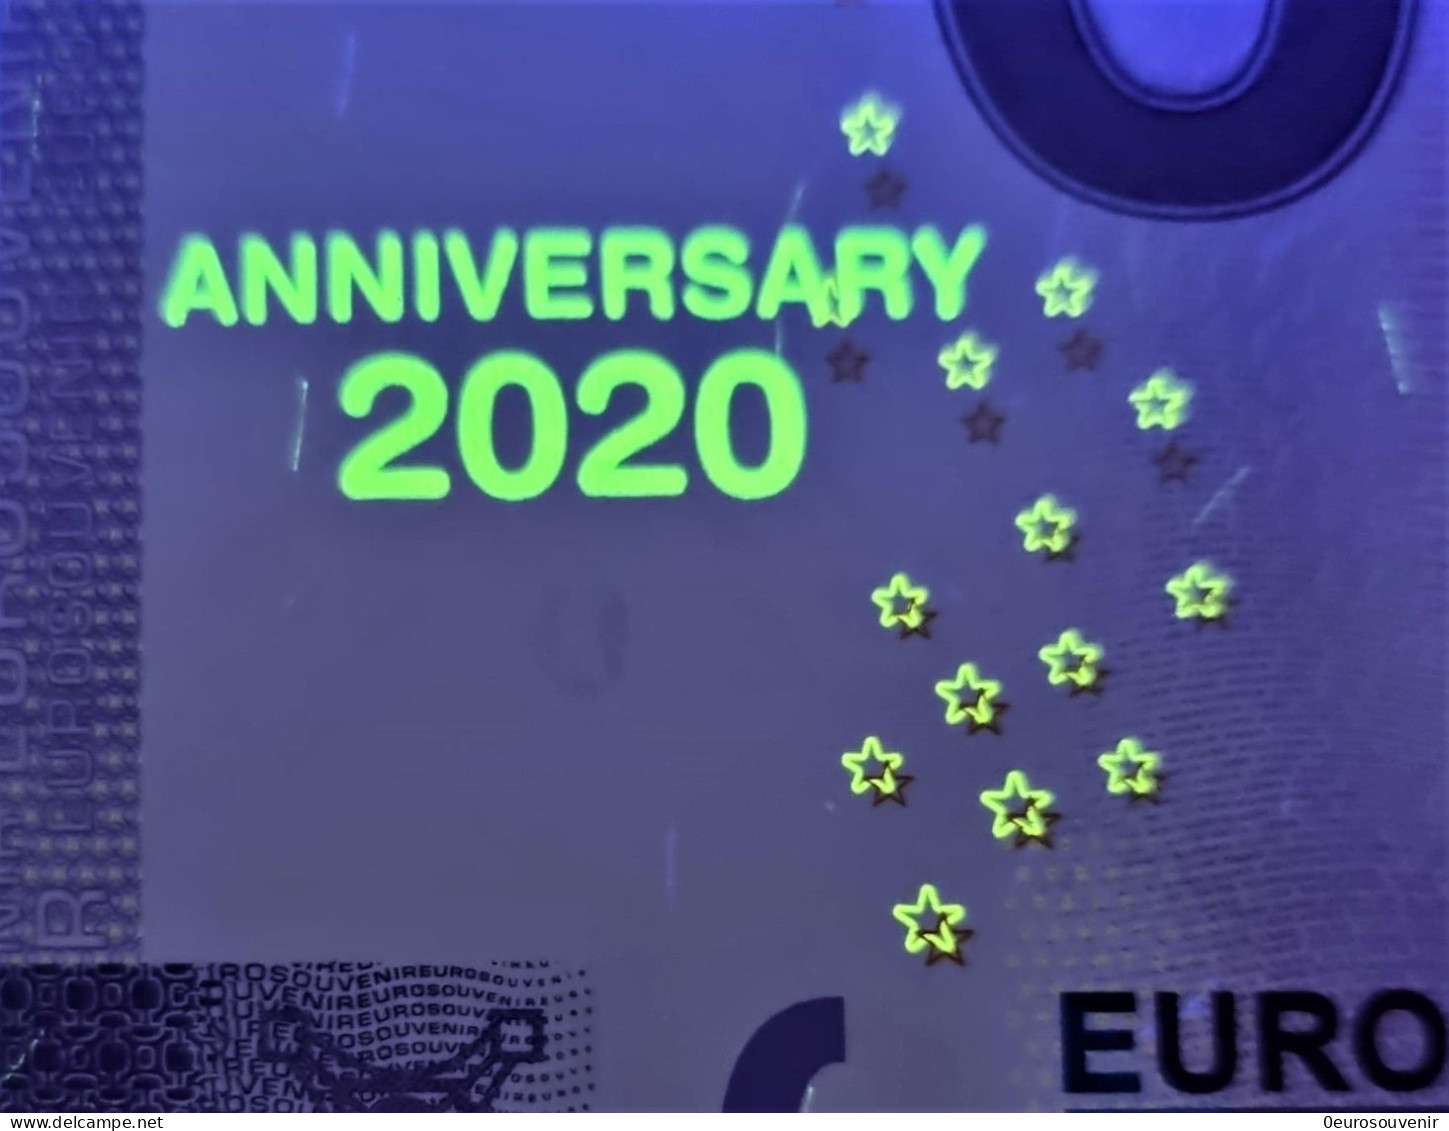 0-Euro XEBU 2021-3 Color WALHALLA - DONAUSTAUF ANNIVERSARY FARBDRUCK - Privatentwürfe